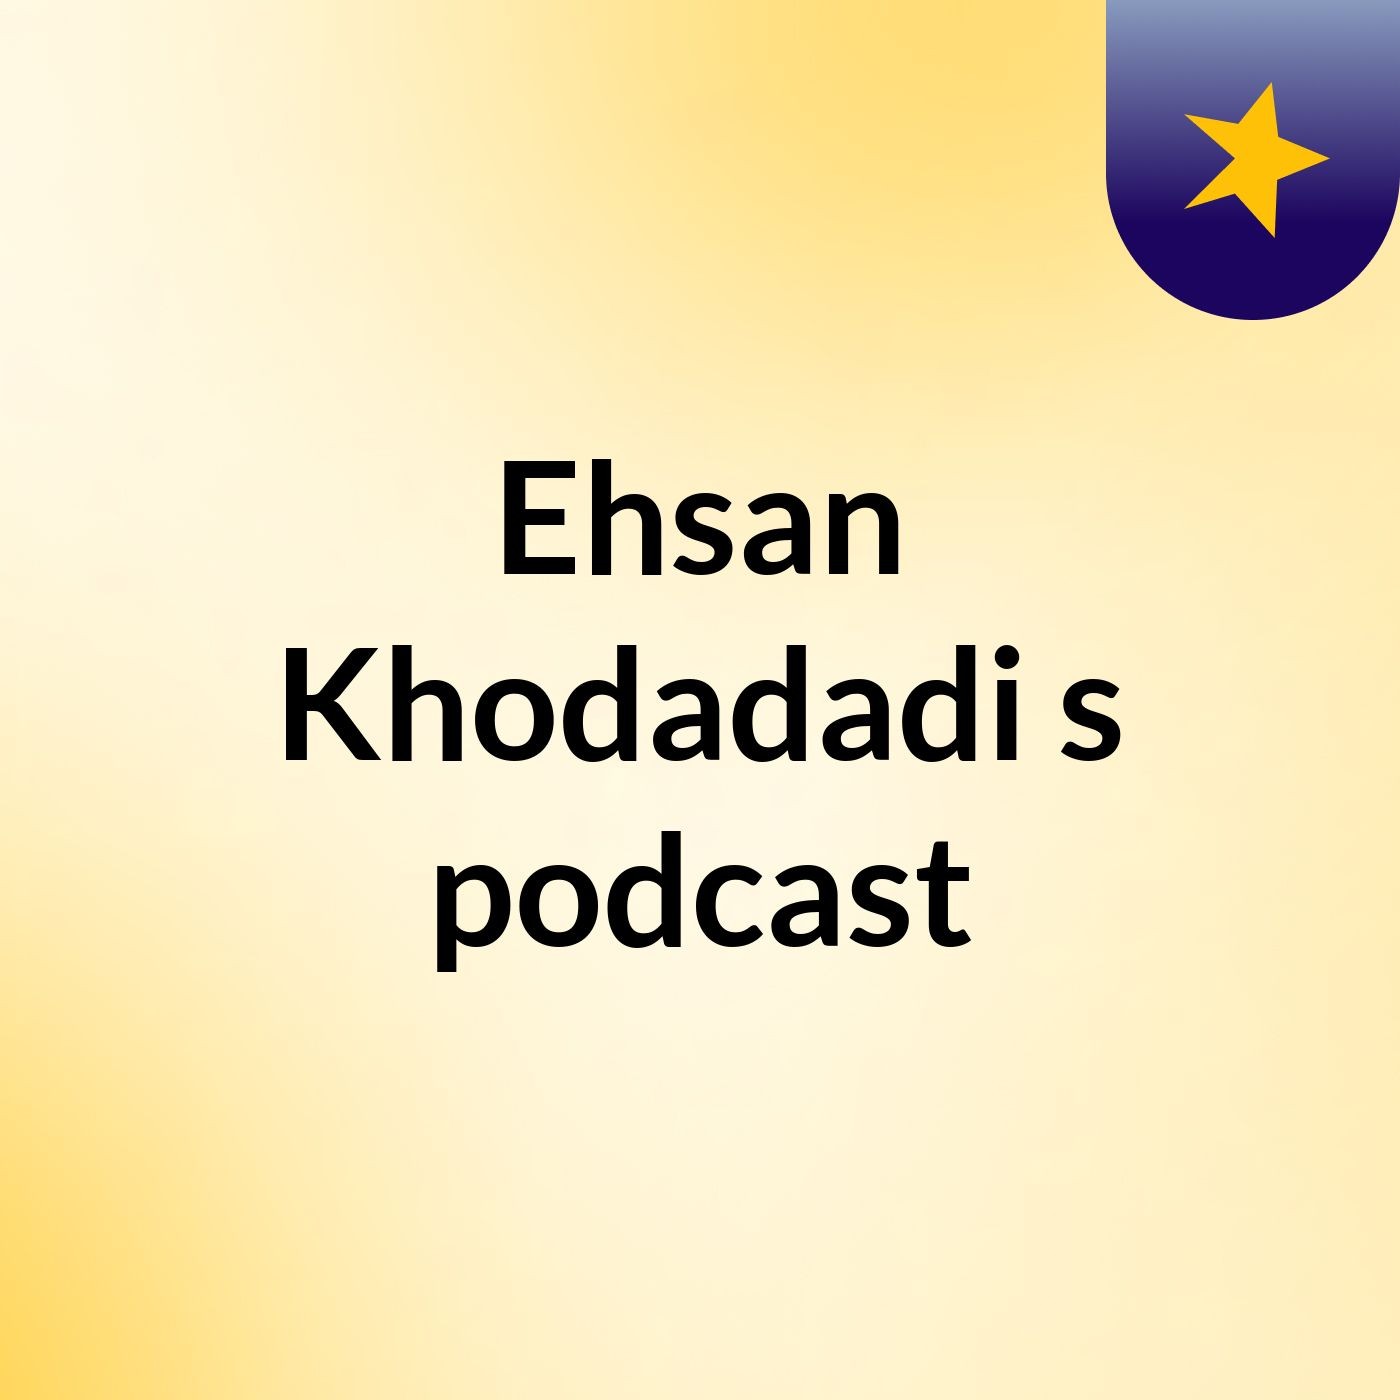 Ehsan Khodadadi's podcast